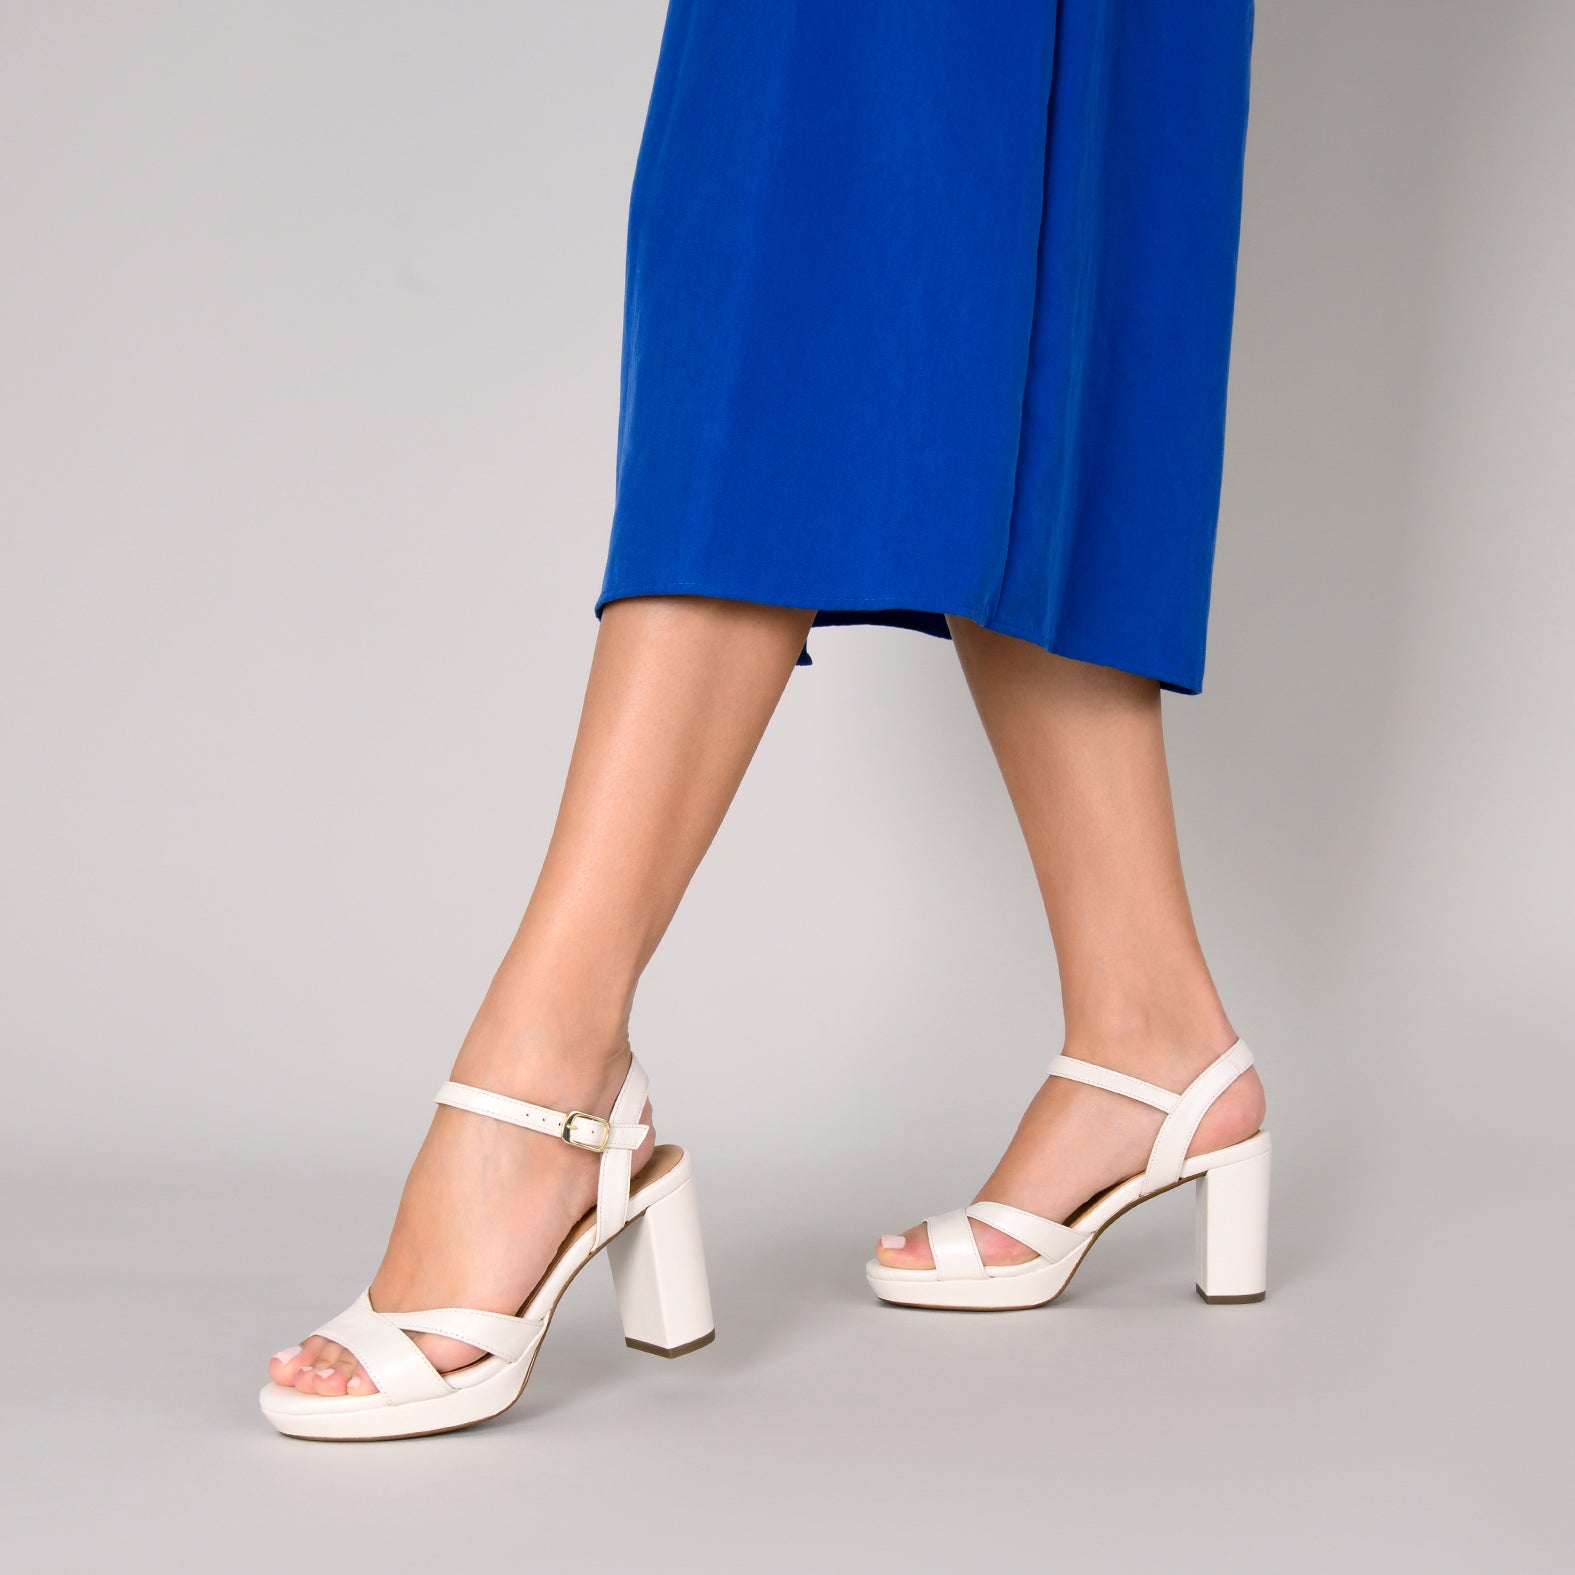 PARIS – PEARL high heel sandal with platform